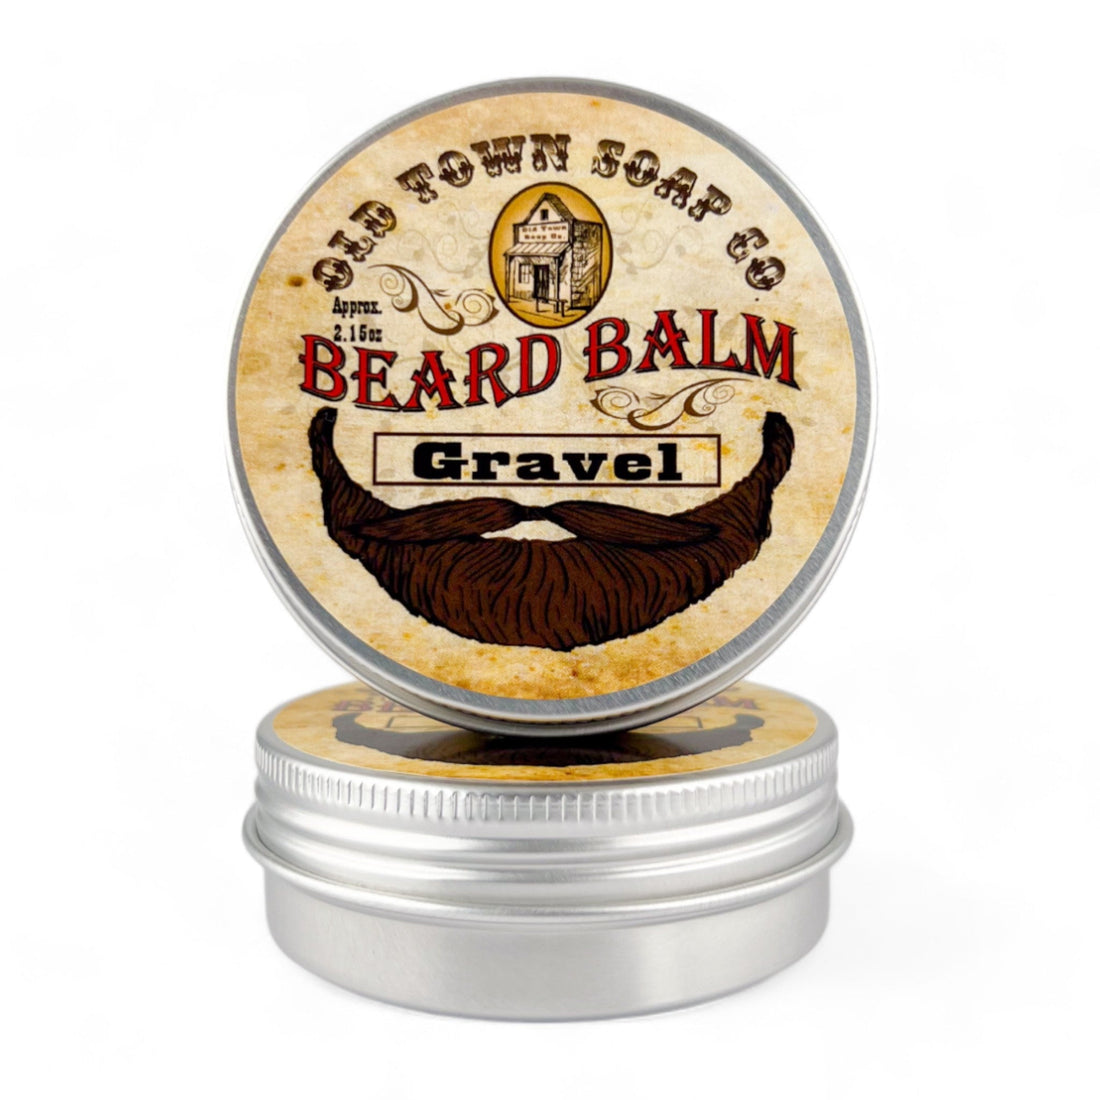 Gravel Beard Balm - Old Town Soap Co.